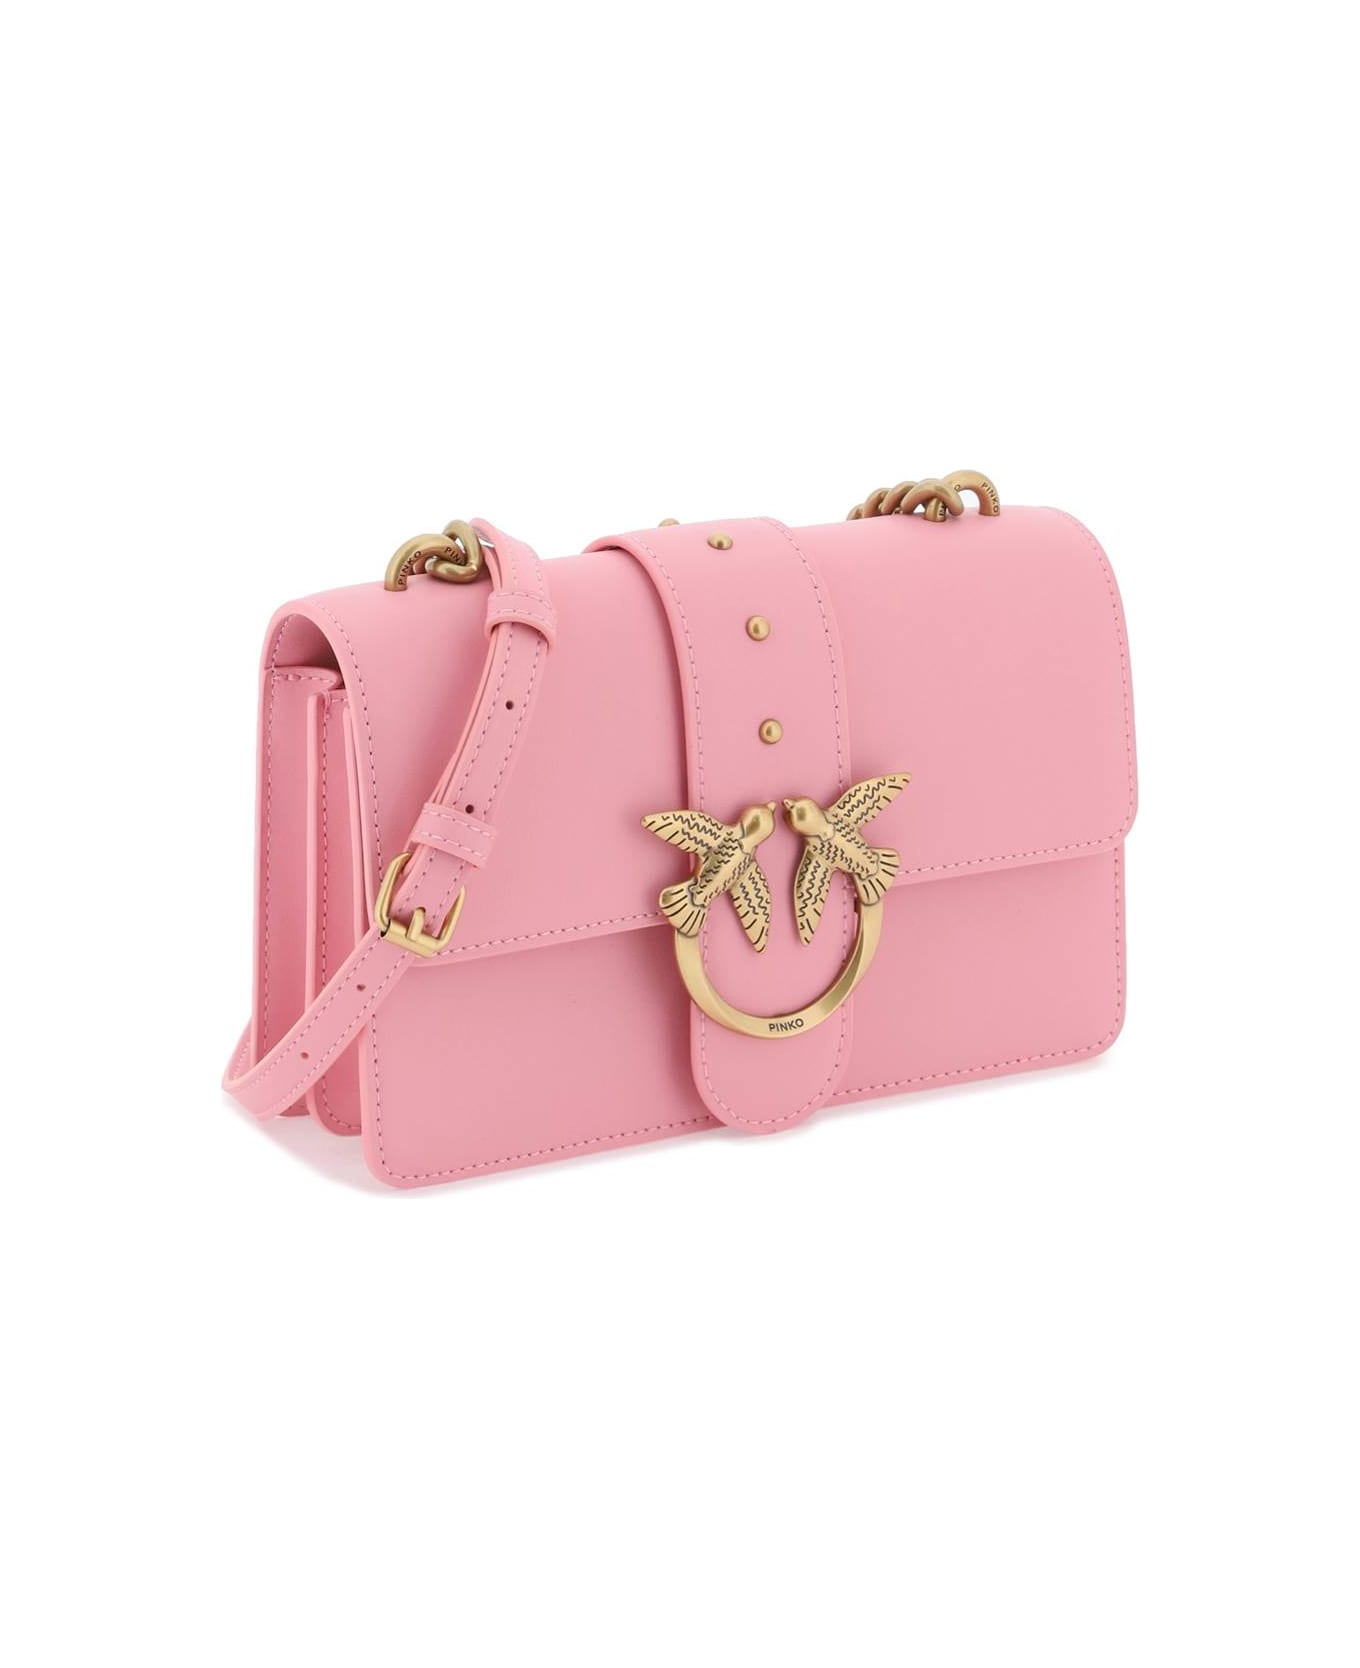 Pinko Mini Love Bag One Simply Shoulder Bag - ROSA MARINO ANTIQUE GOLD (Pink)